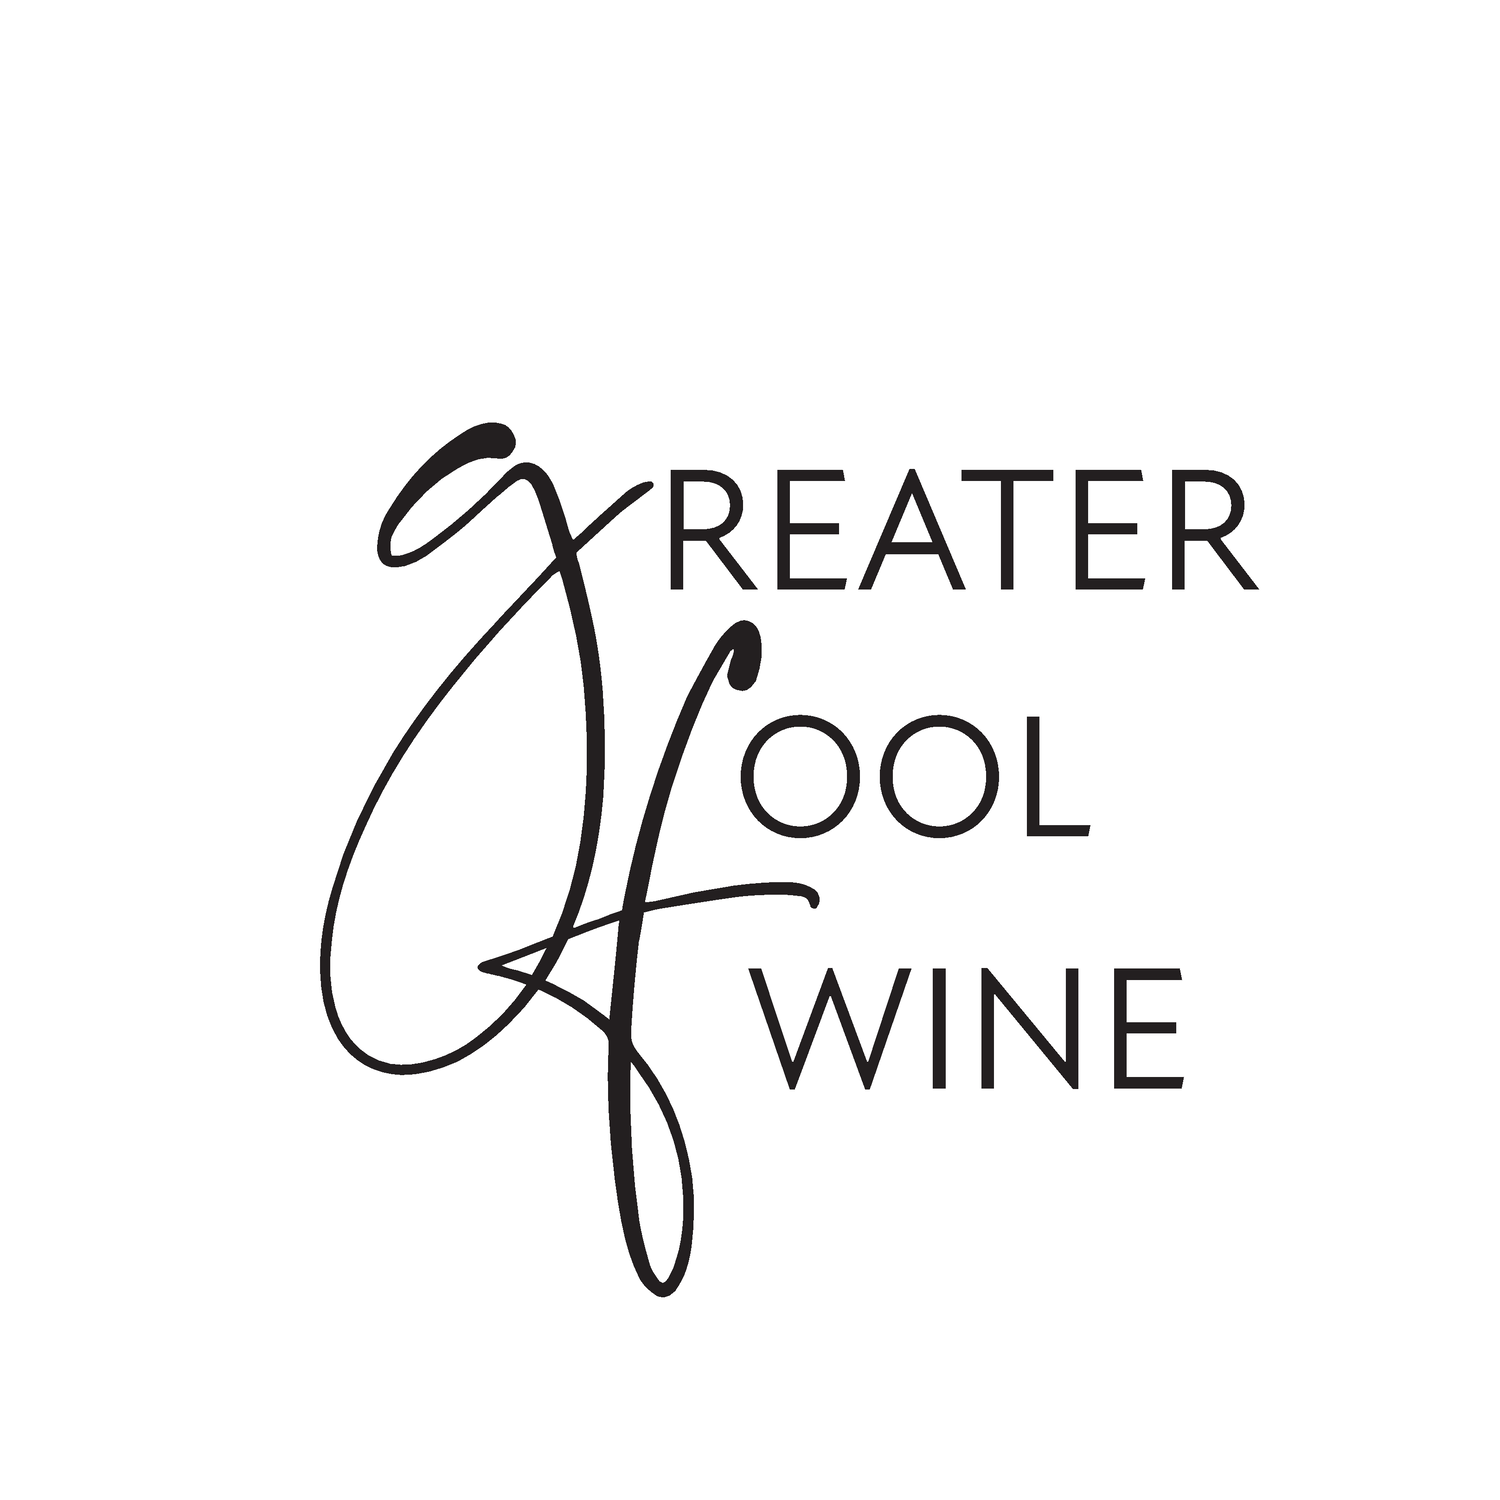 Greater Fool Wine 